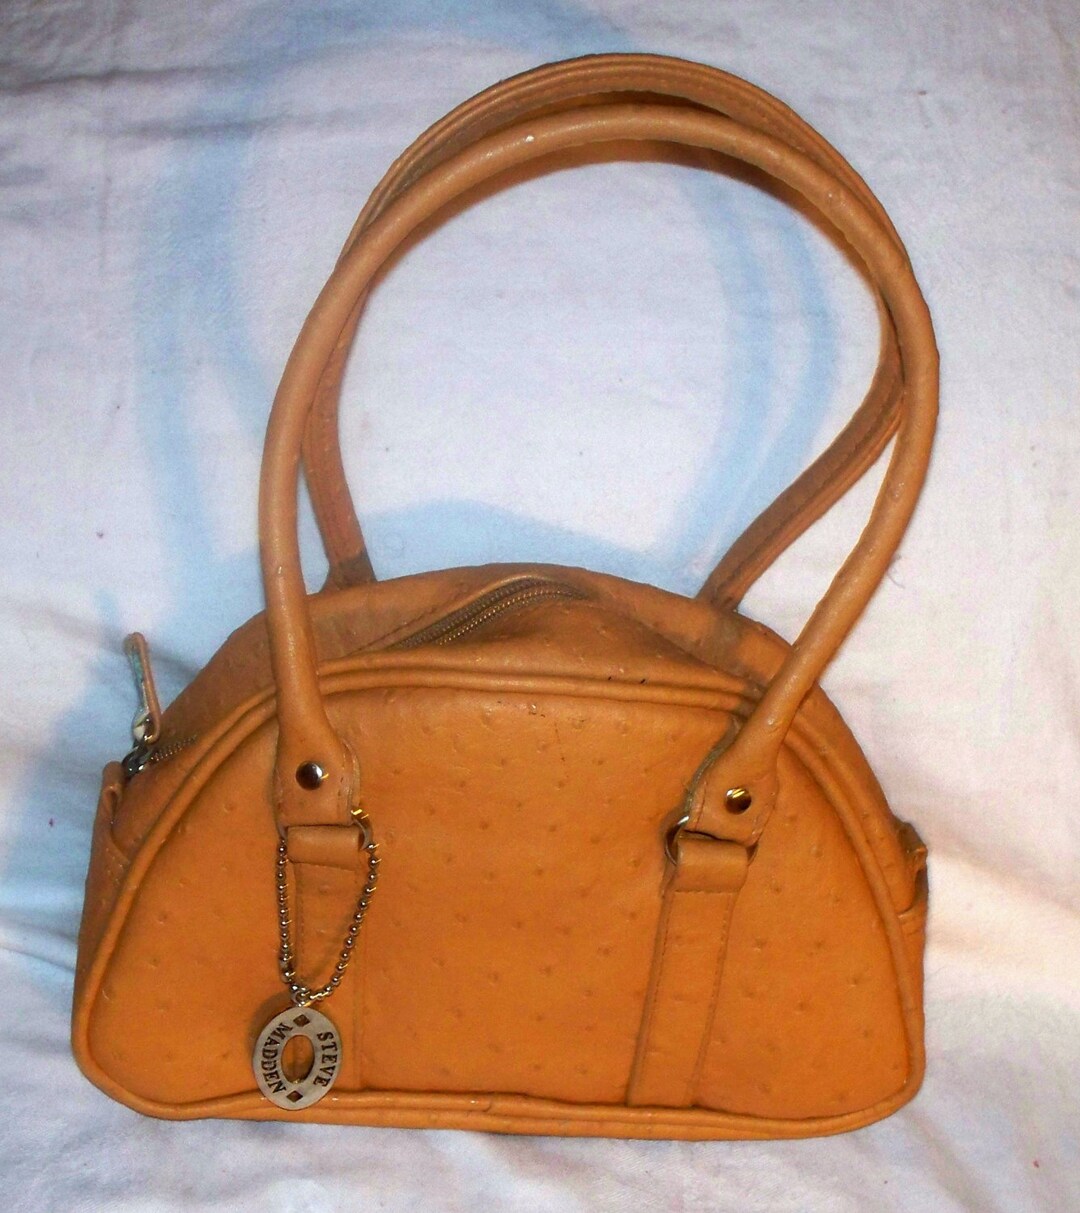 Steve Madden Bdrake Crossbody Bag (Black): Handbags